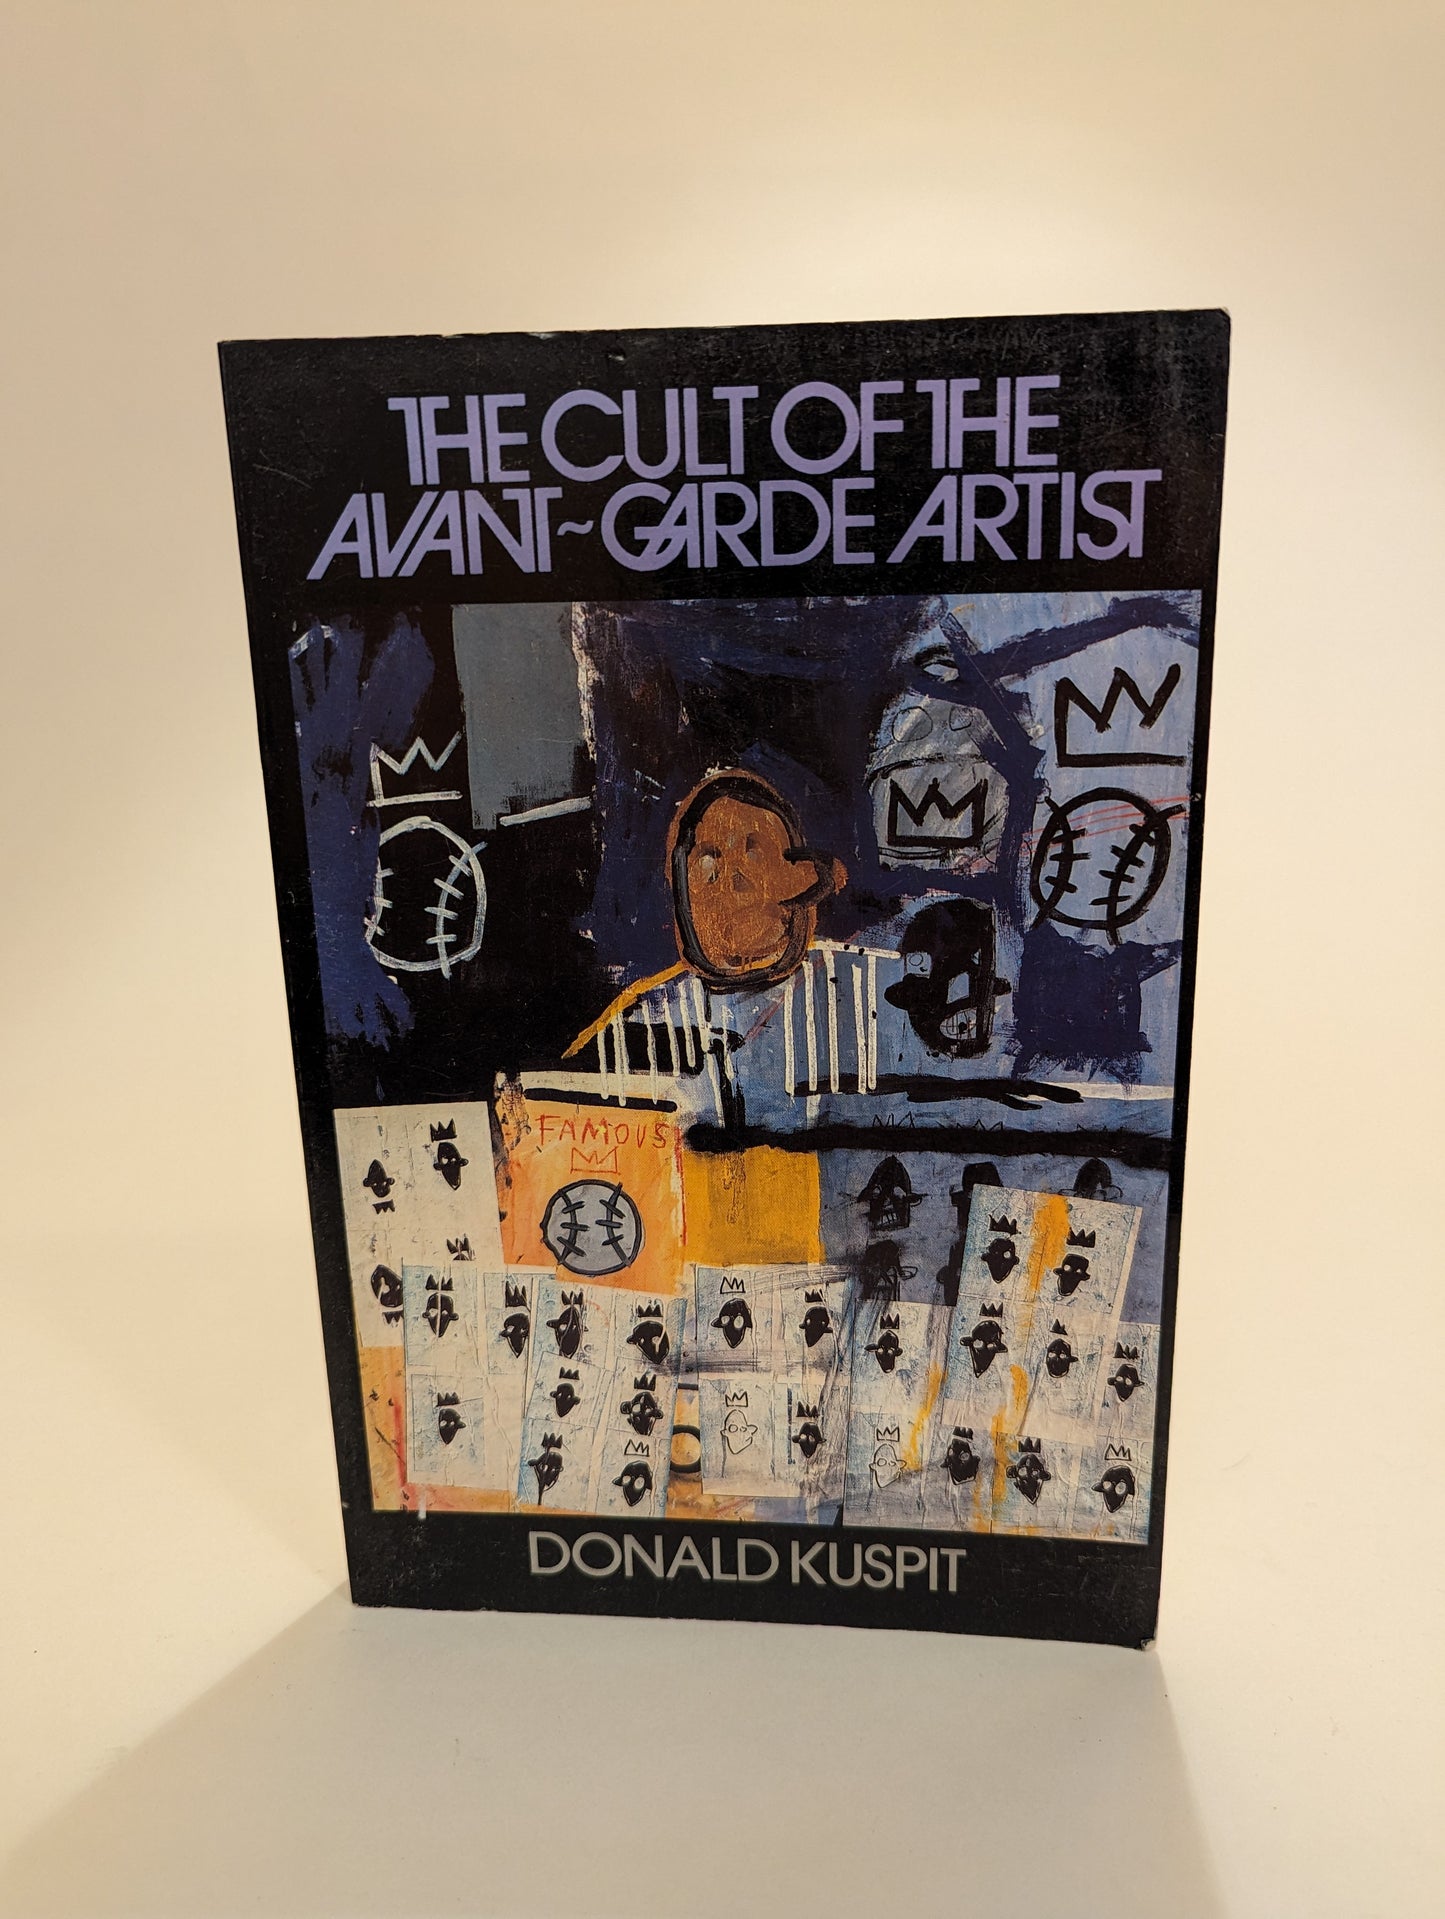 The Cult of the Avant-Garde Artist [Donald Kuspit]